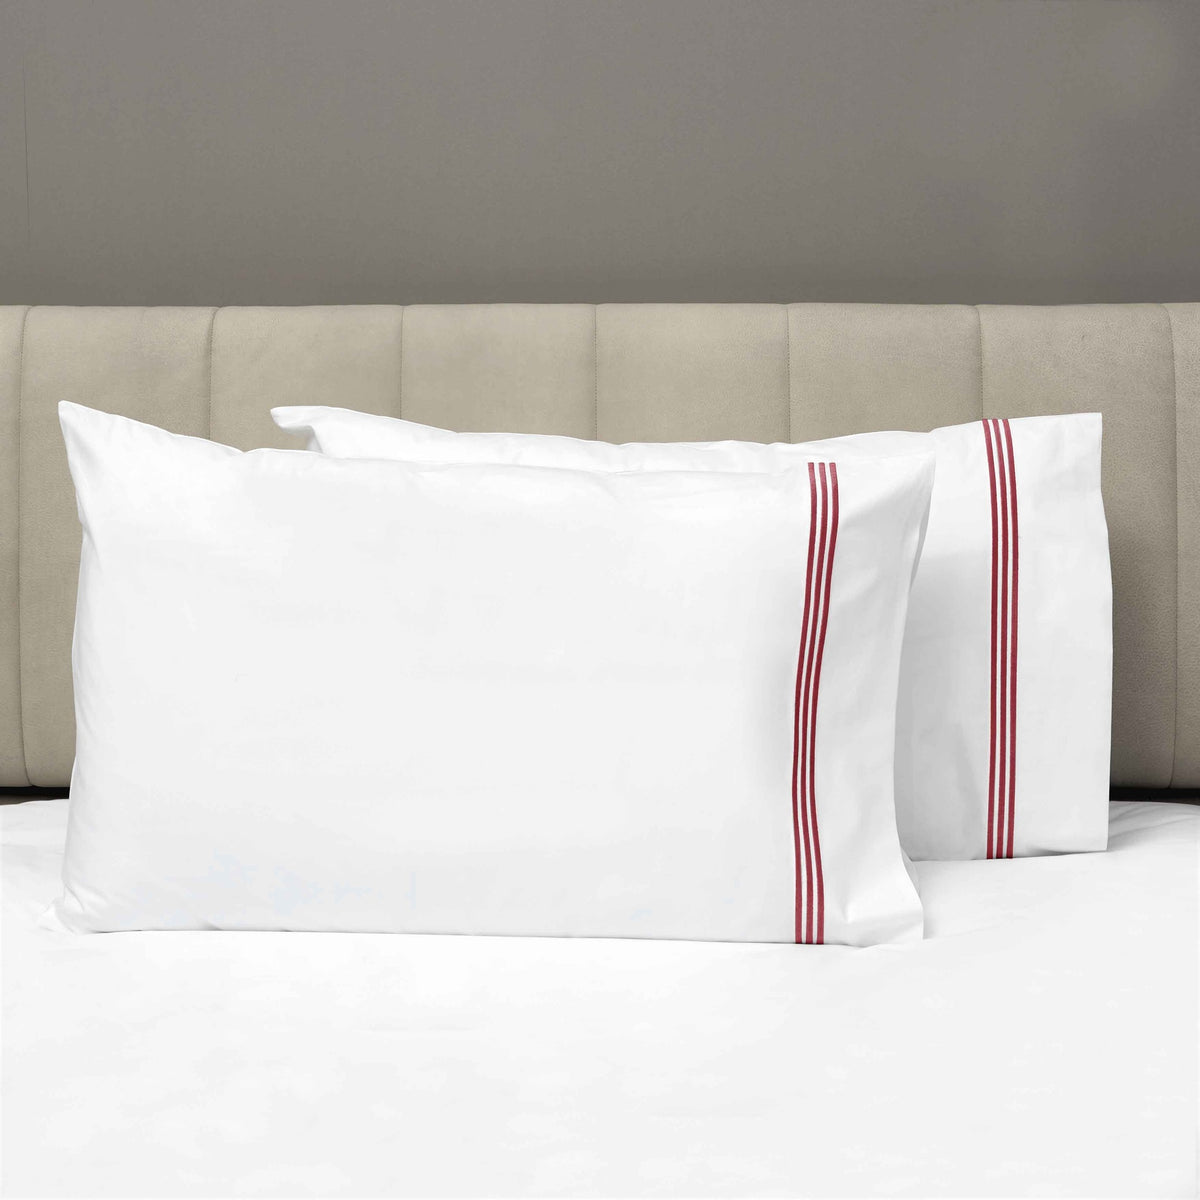 Pair of Pillowcases of Signoria Platinum Percale Bedding in White/Cardinale Red Color